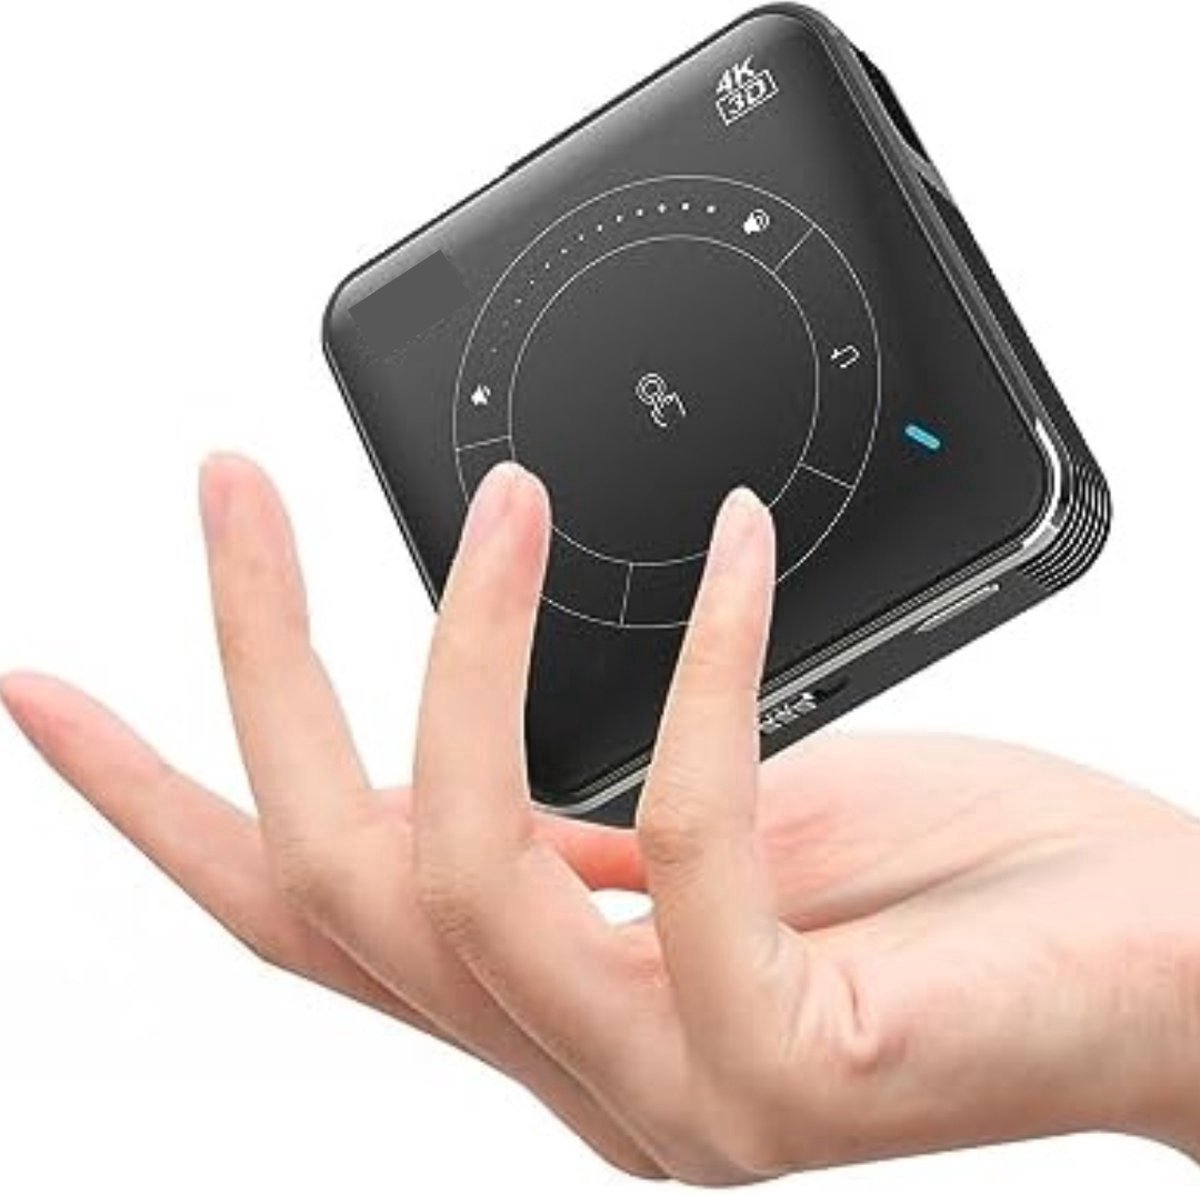 Mini beamer - Mini projector - Draagbaar - WiFi - Bluetooth - Zwart - USB - HDMI